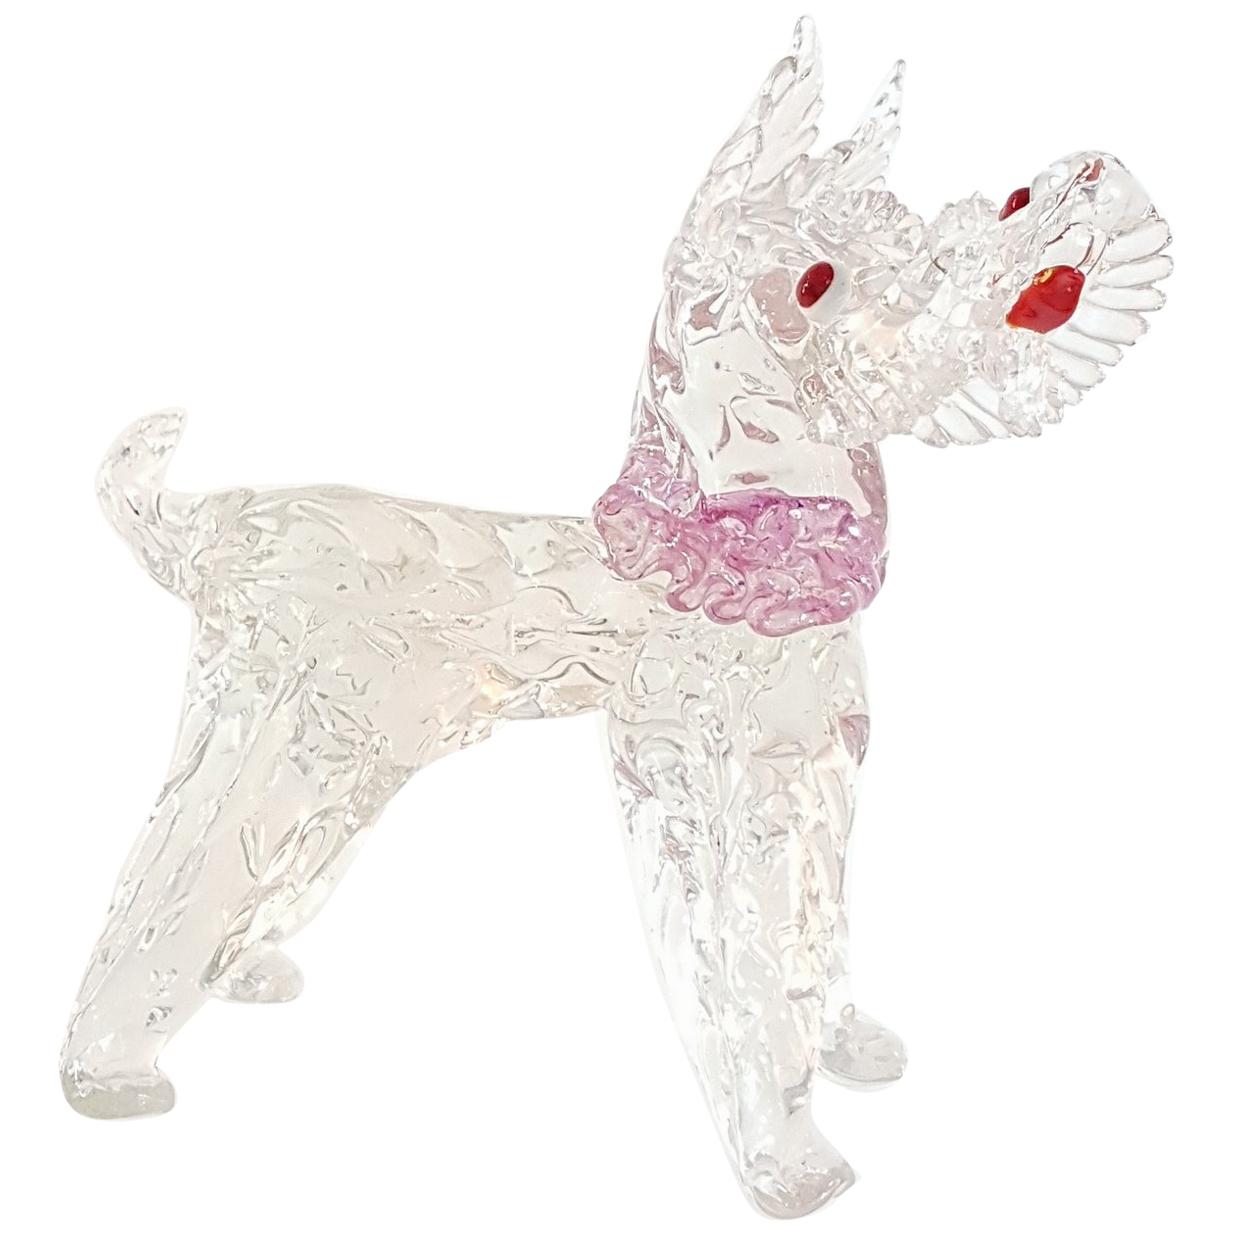 Barovier Toso Murano Dog Figurine